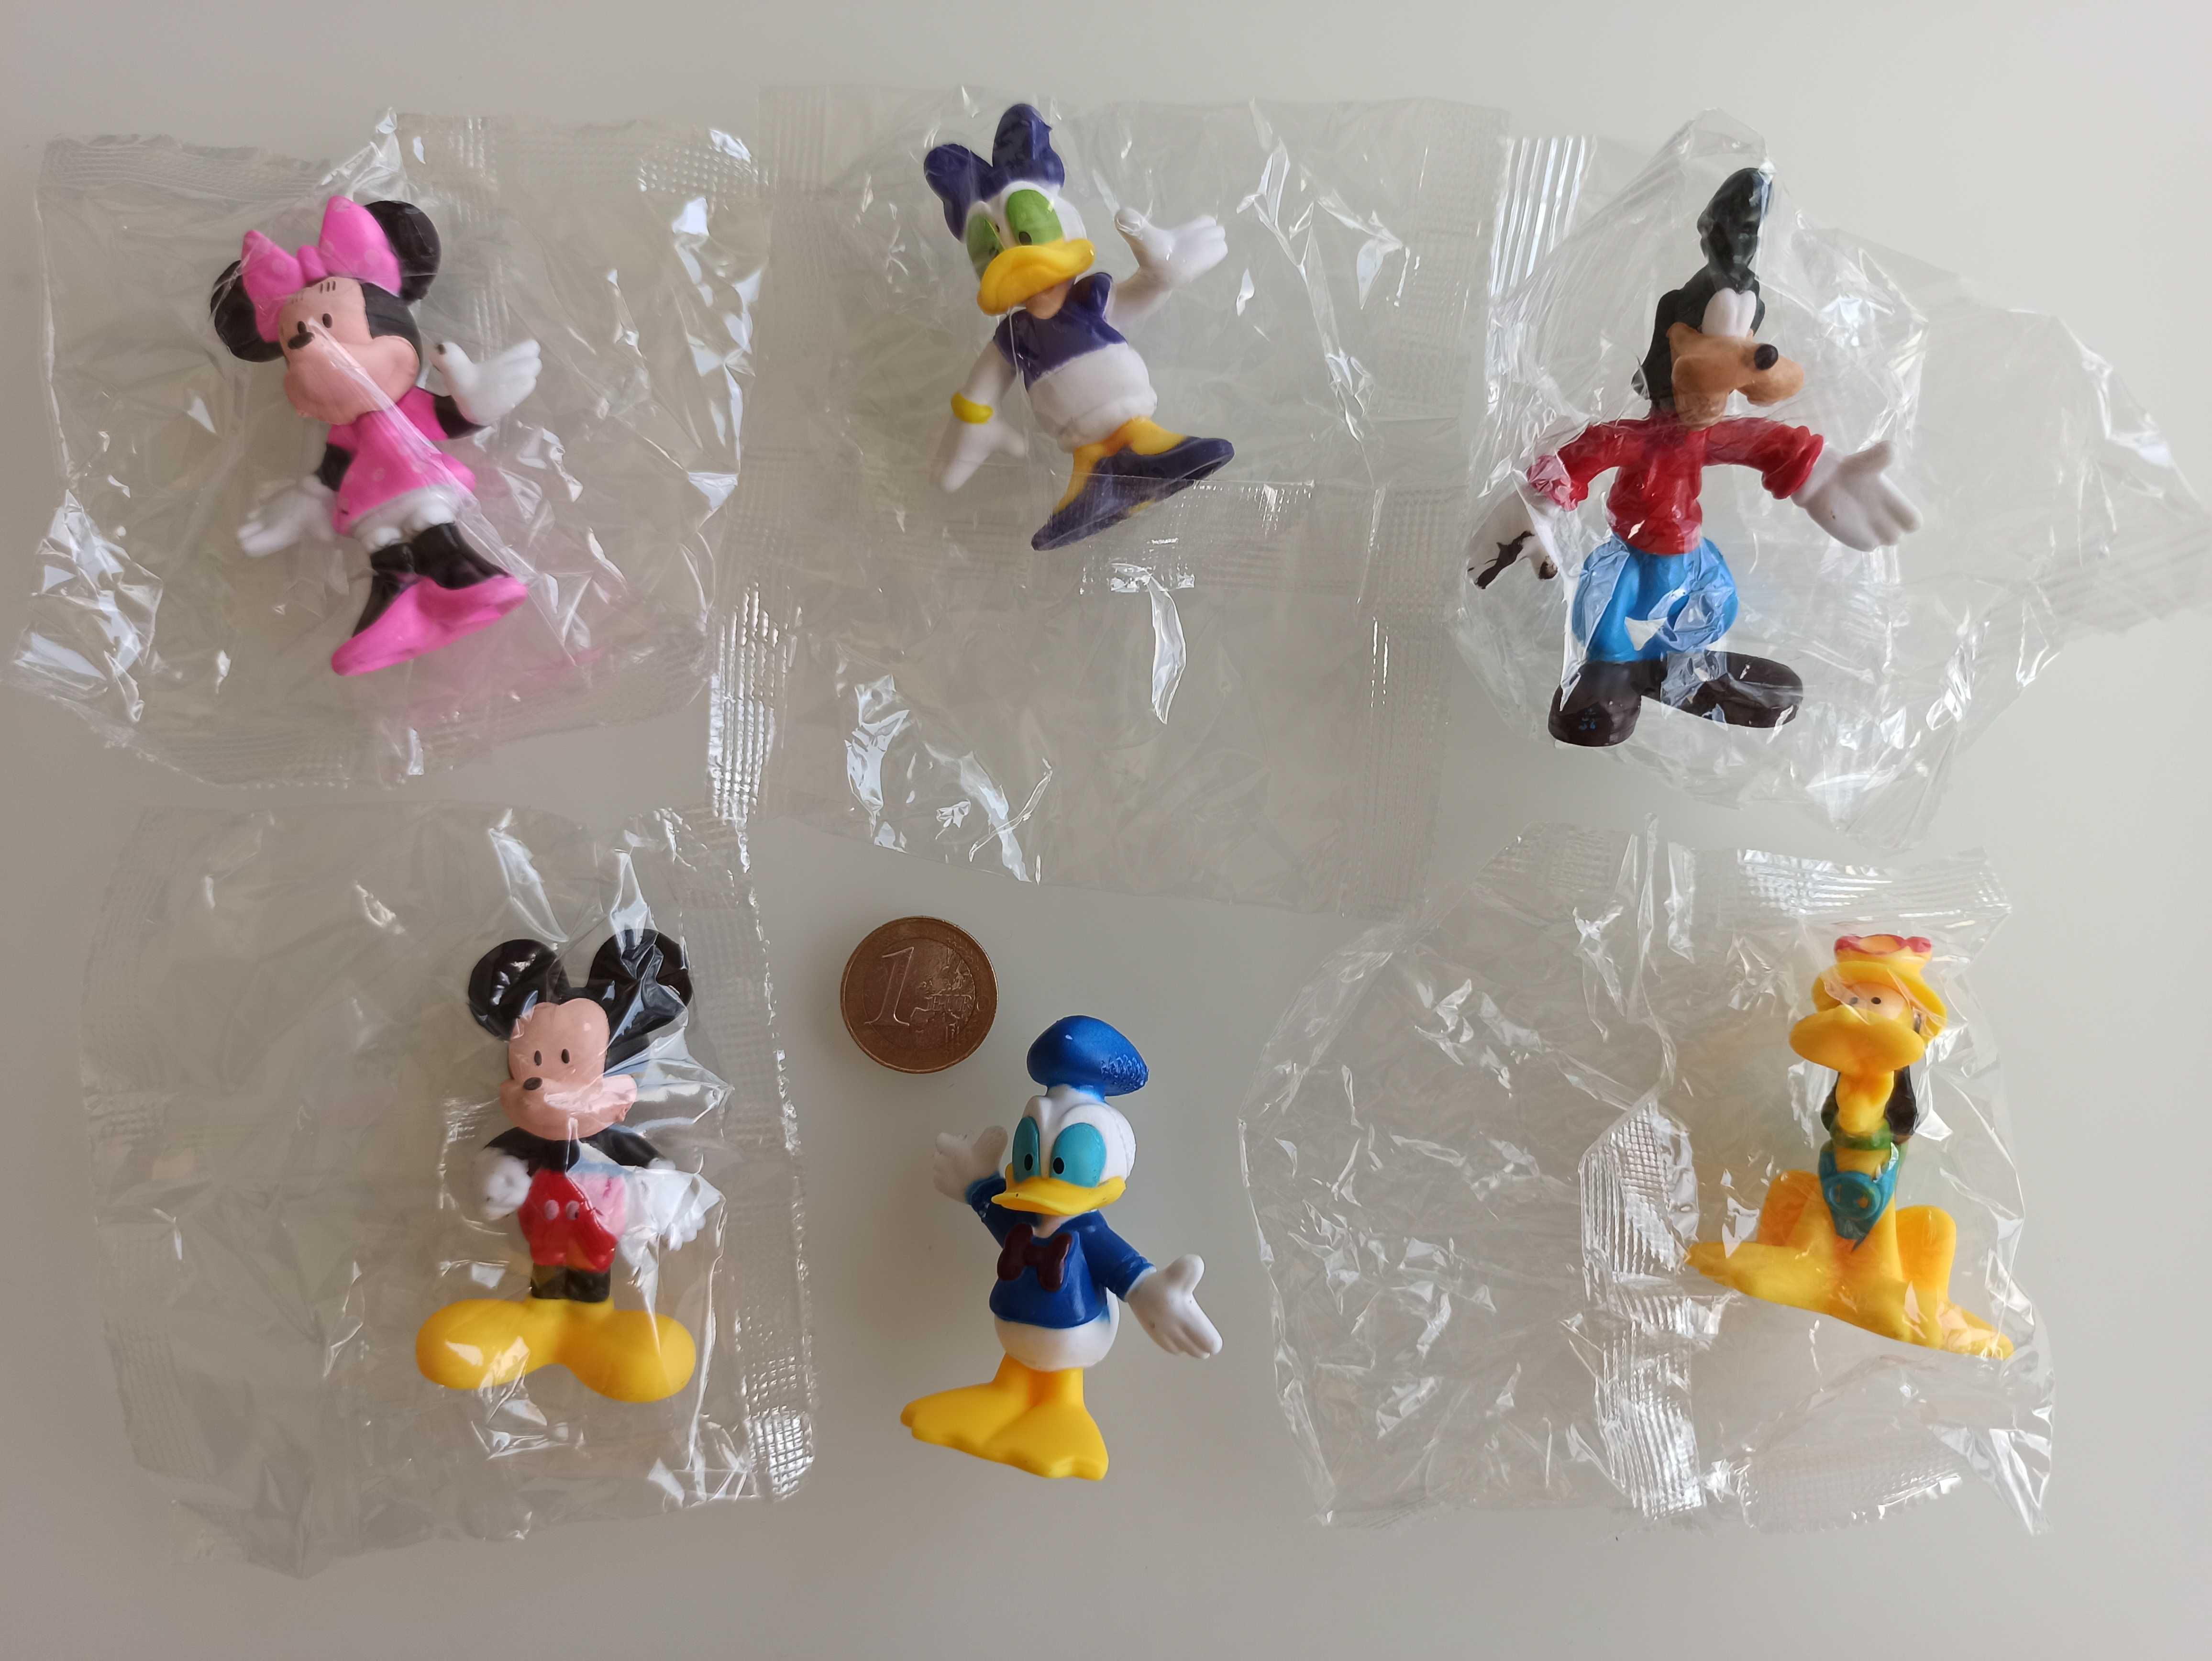 6 bonecos Disney Mickey Donald Minnie Pateta Pluto Margarida